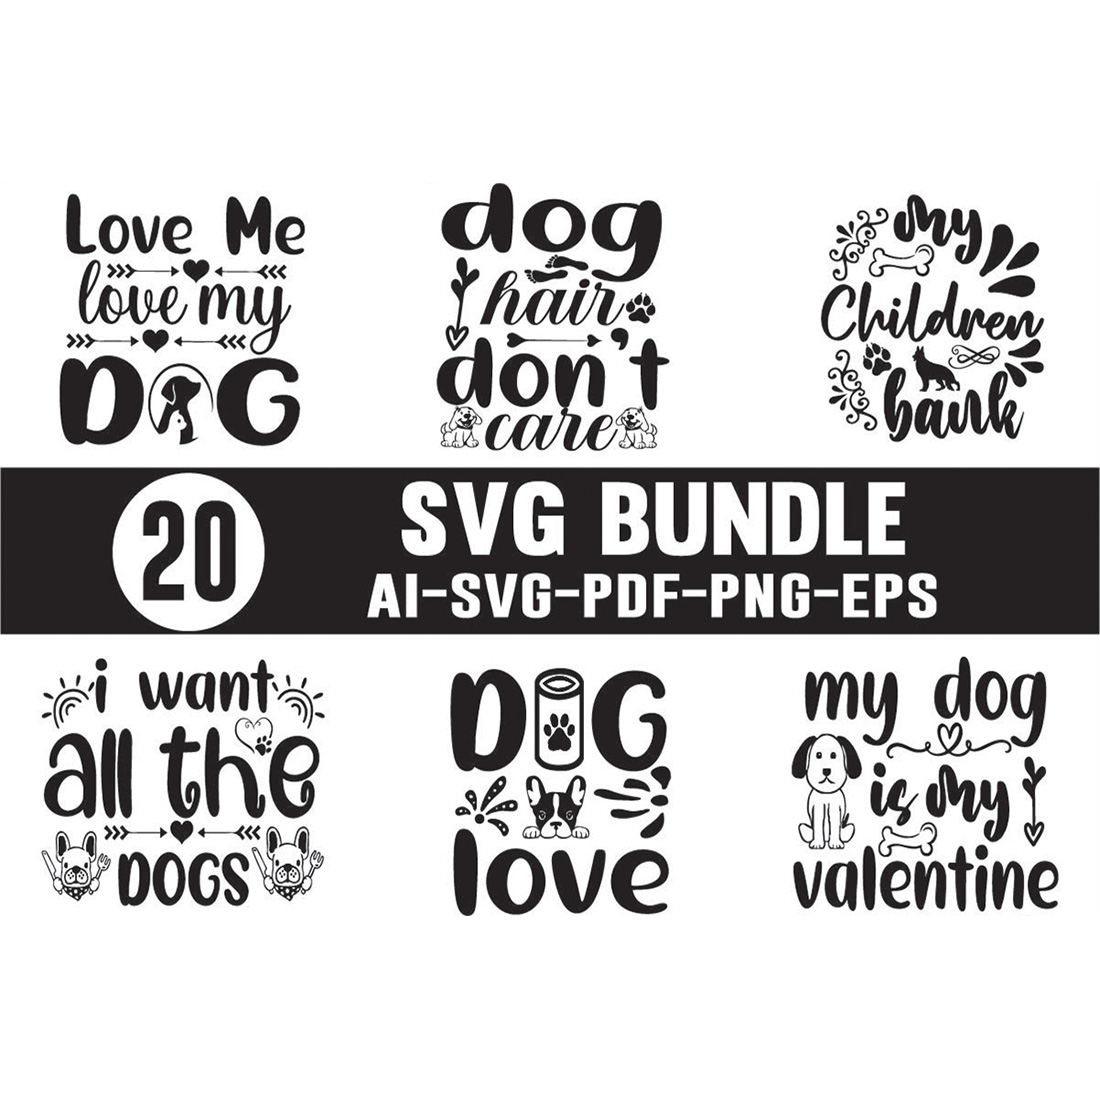 The svg bundle includes 20 svg designs for valentine's day.